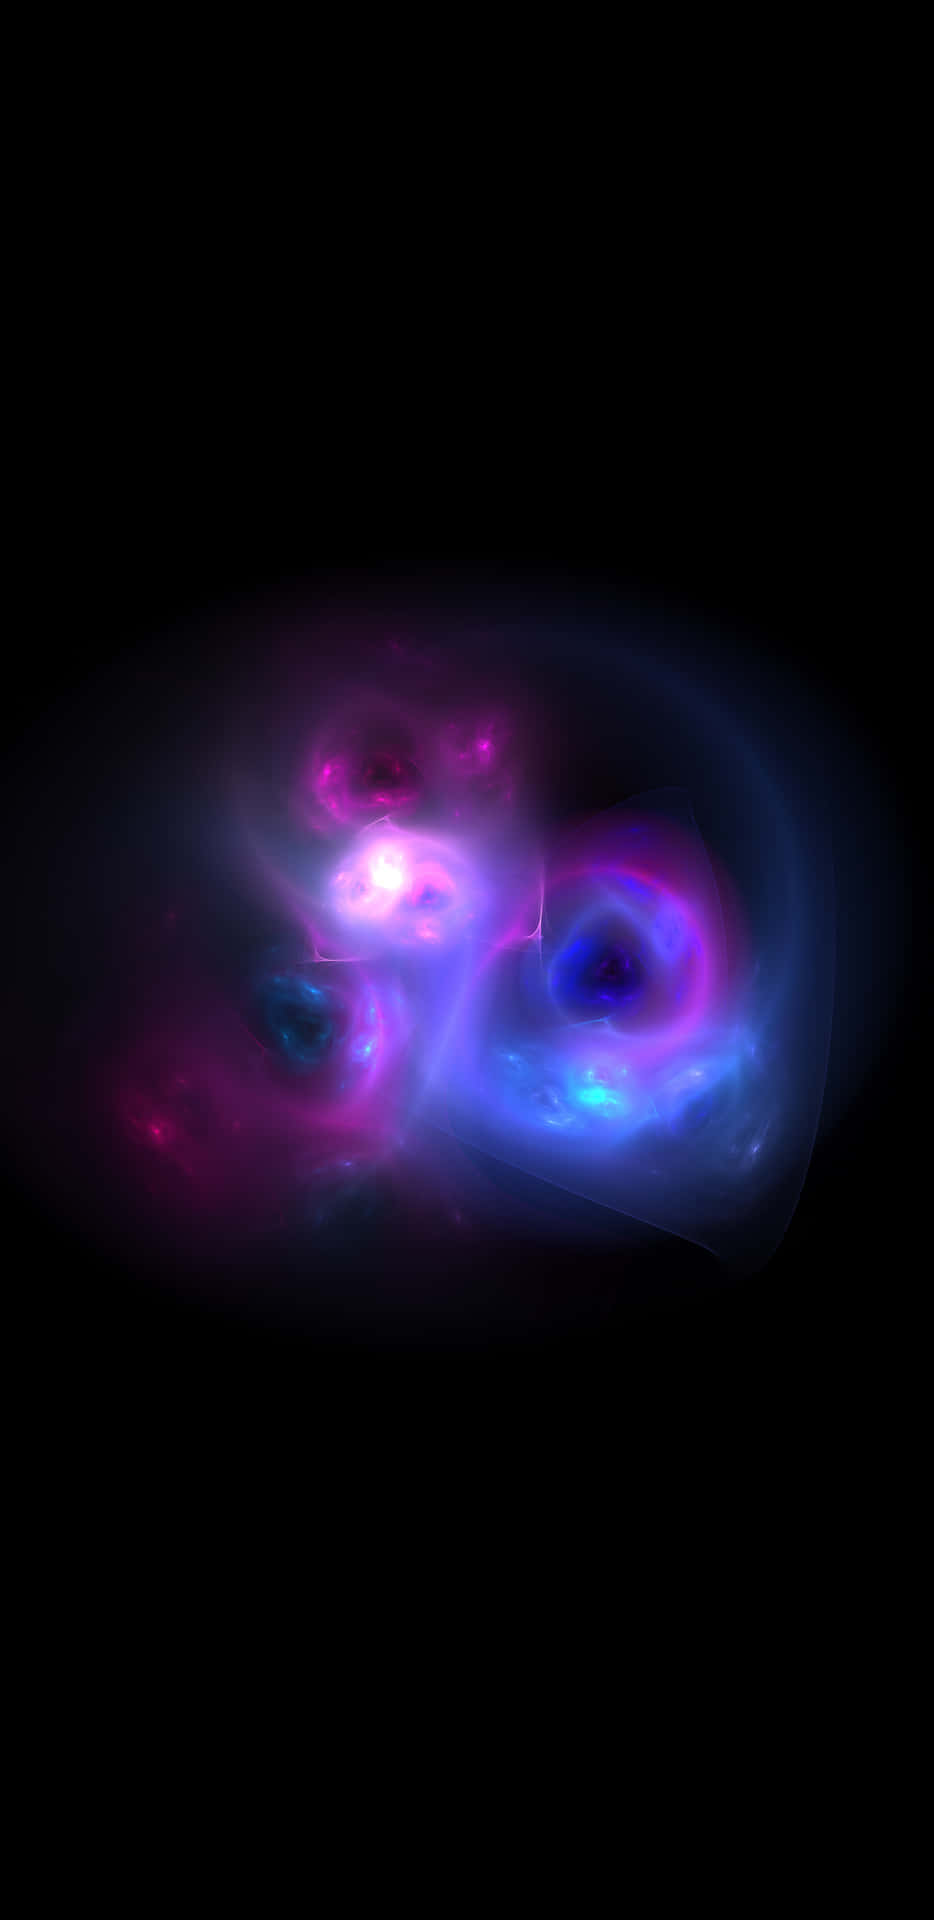 A Blue And Purple Spiral Galaxy